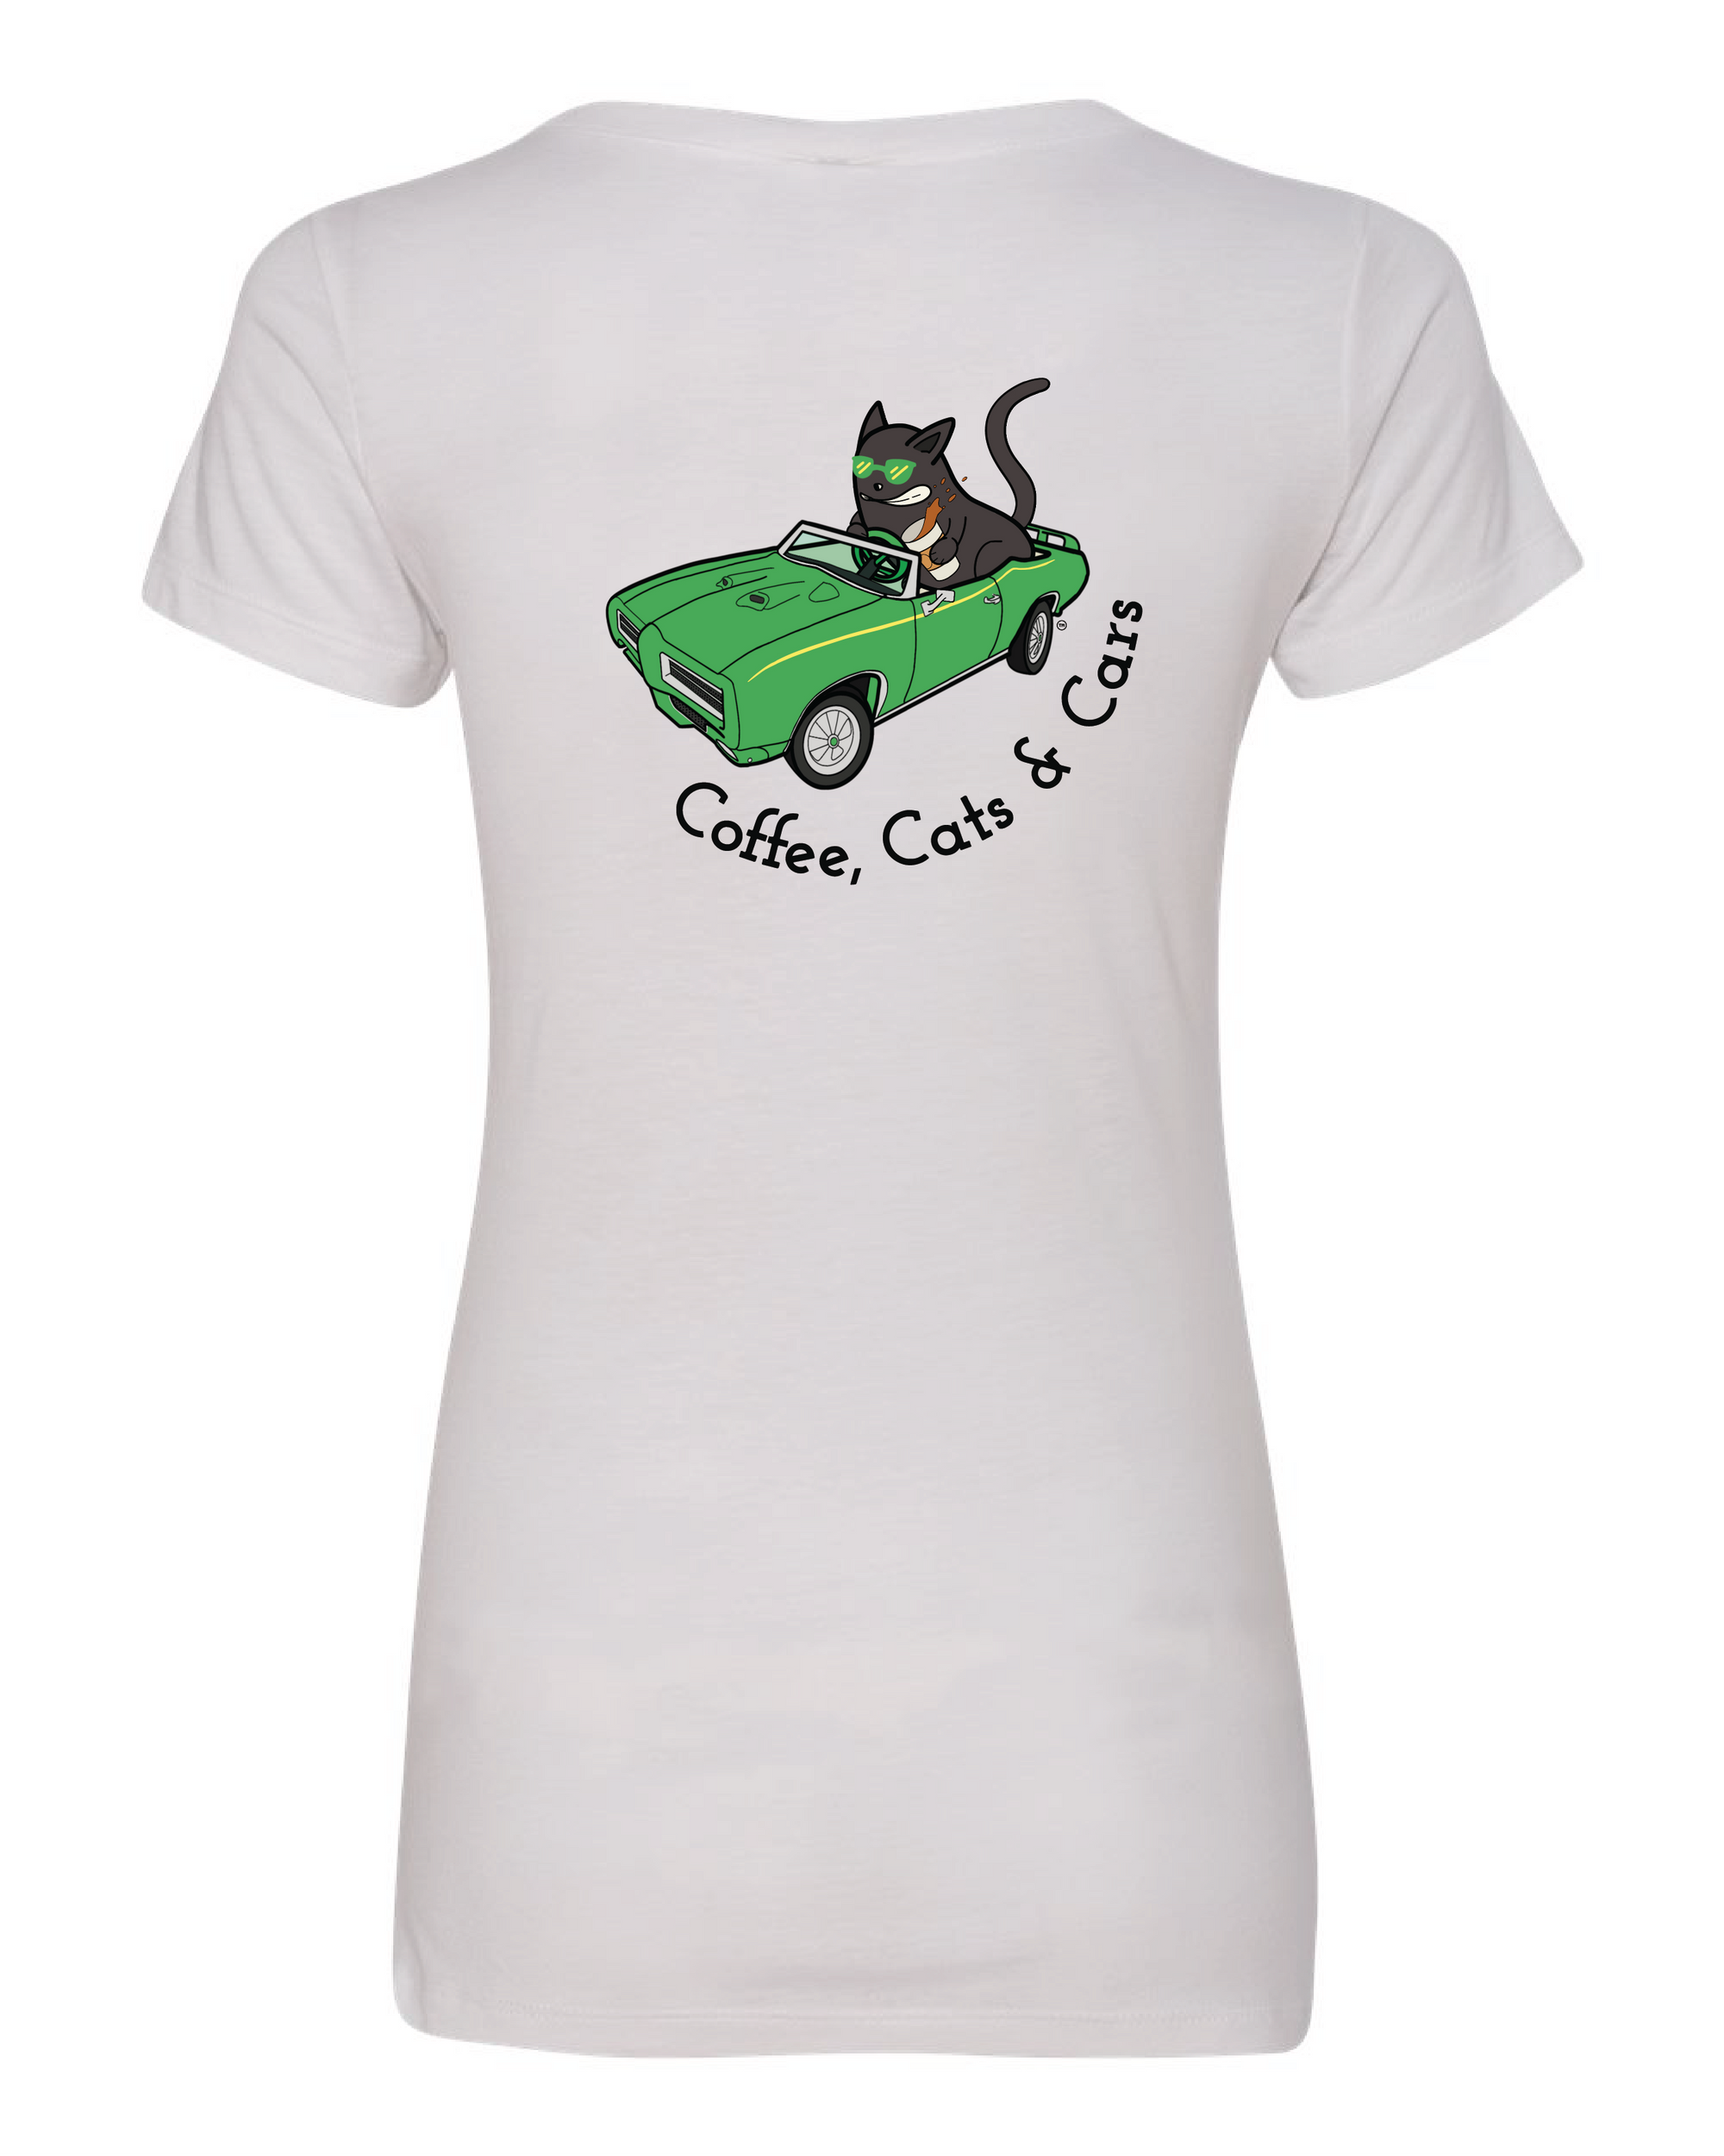 Coffee, Cats & Cars Ladies T-Shirt